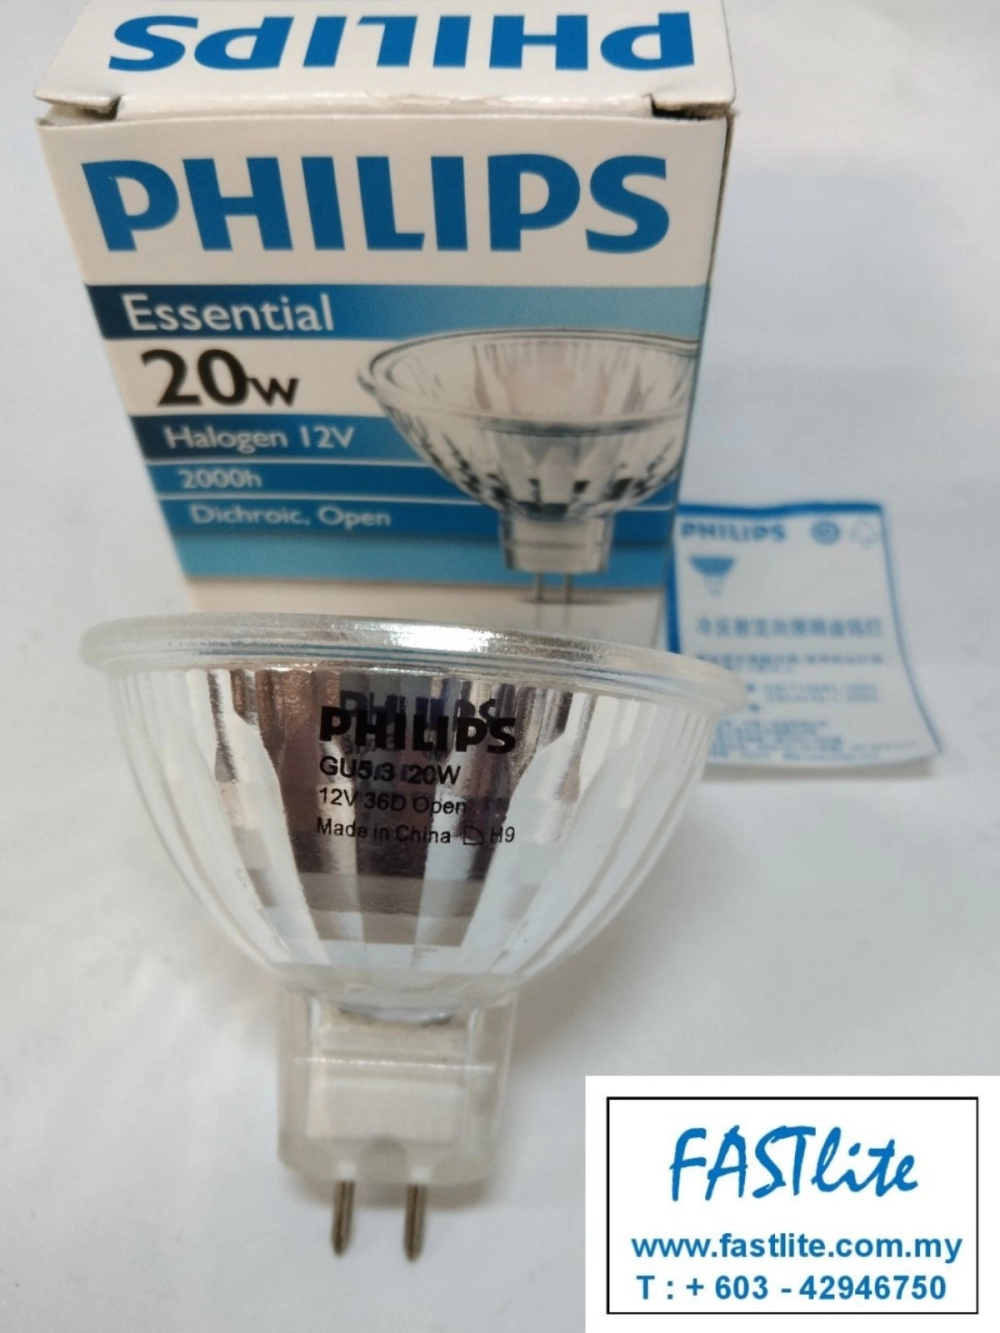 Philips Essential MR16 12V 20W 36Degree Open Dichroic GU5.3 Halogen bulb